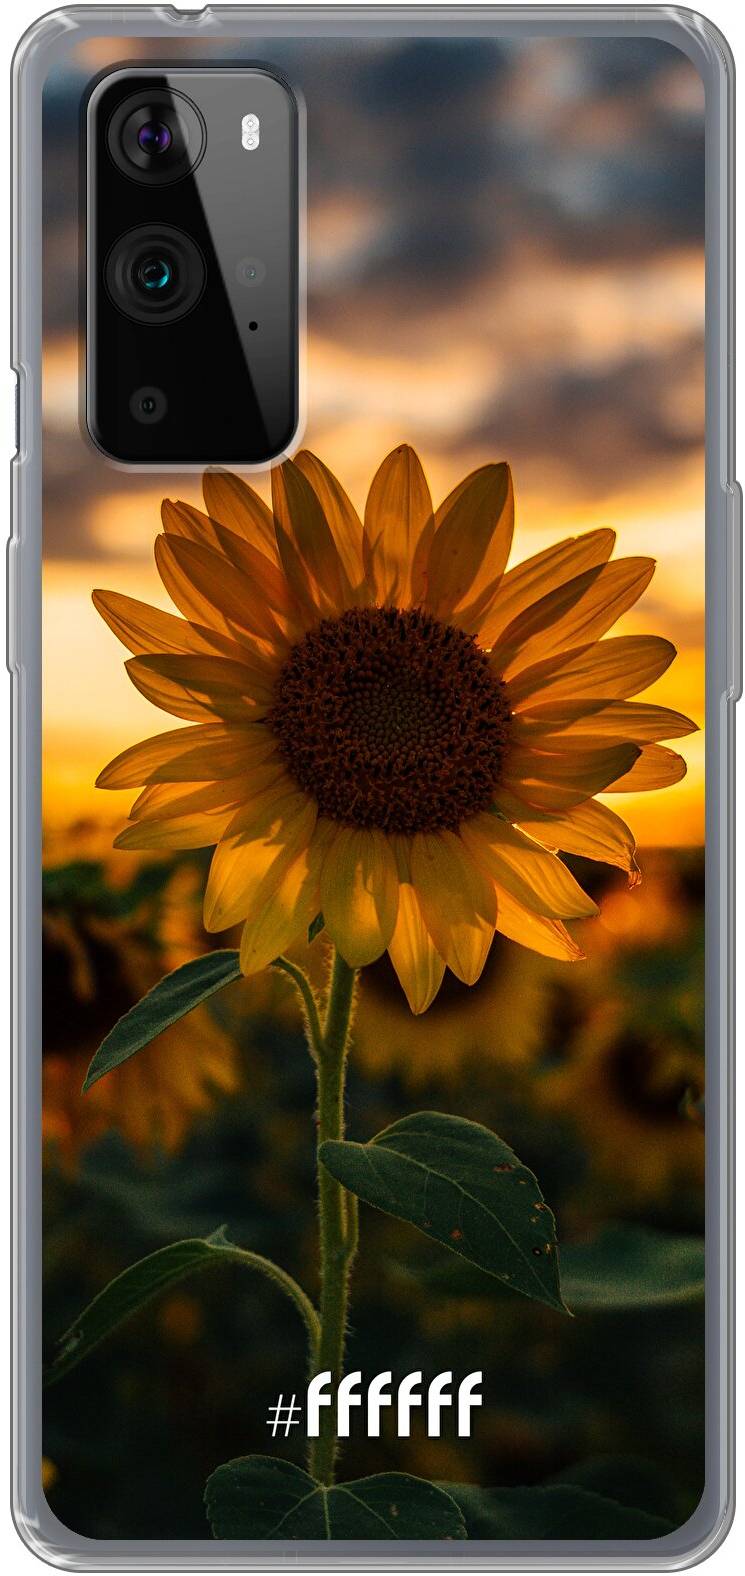 Sunset Sunflower 9 Pro